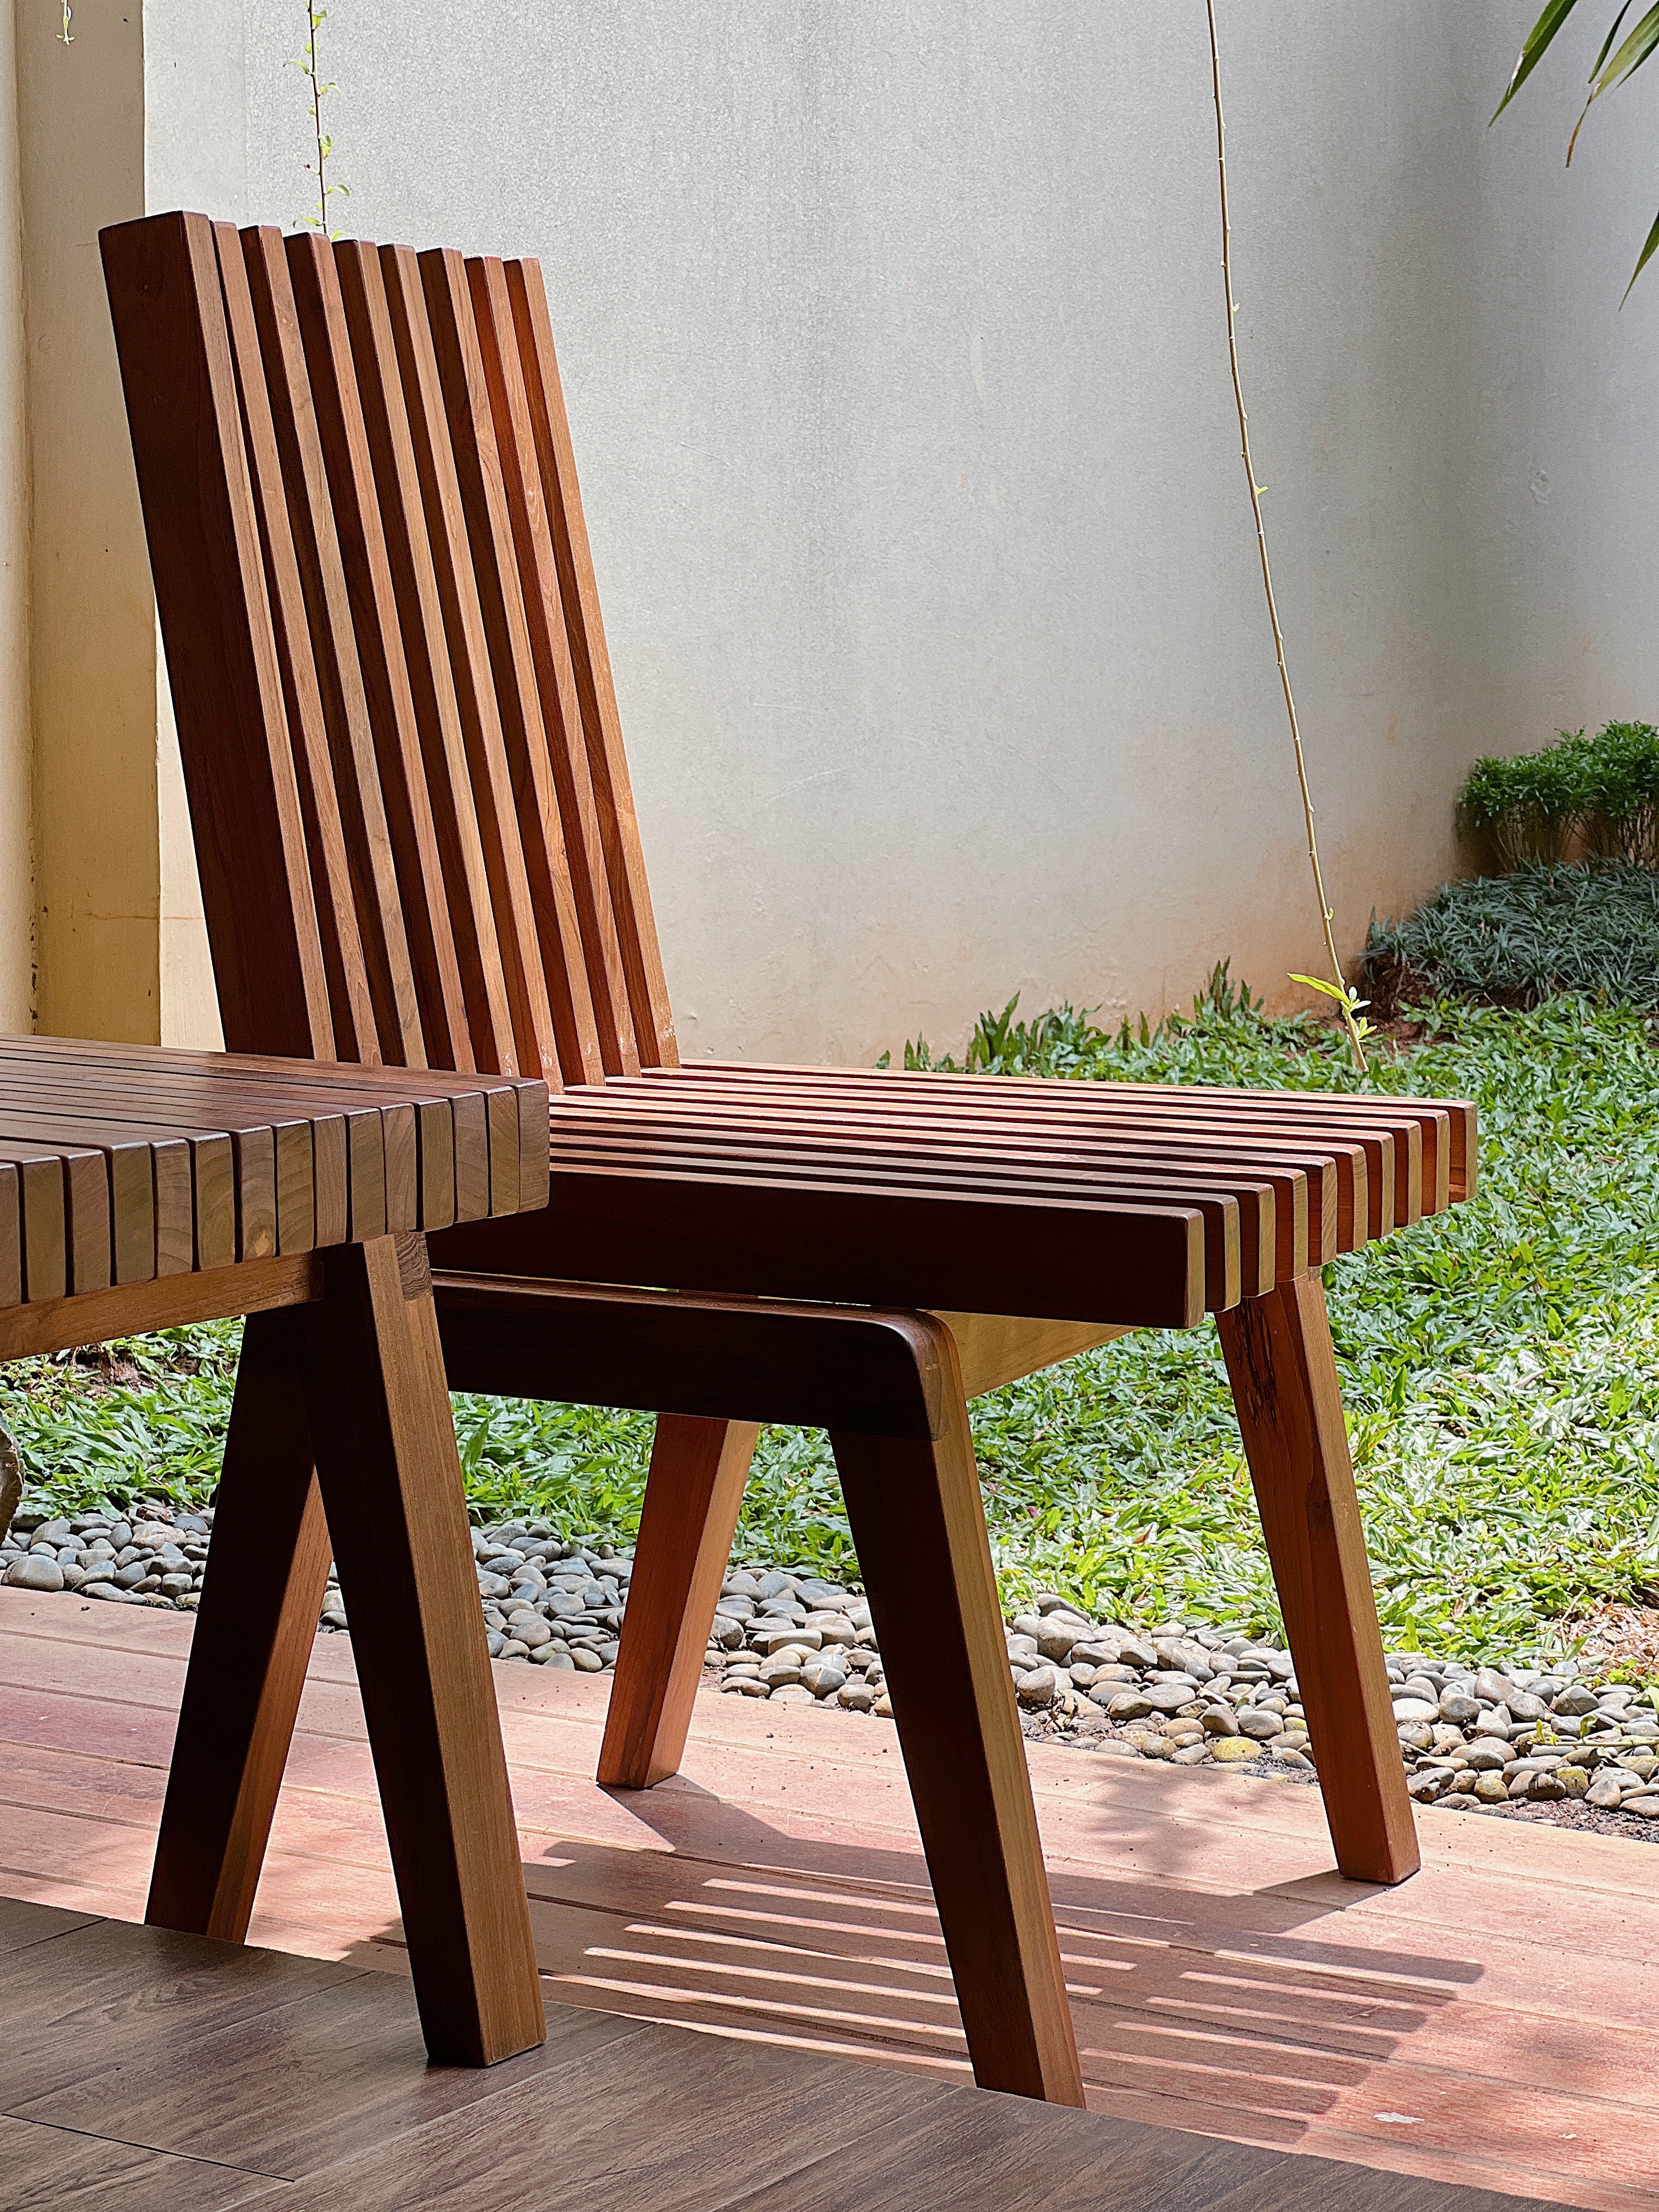 Meja Kursi Lipat Kayu Jati Reclaimed (Indoor & Outdoor) Outdoor Table Set Lagom Home Store Jati Furnitur Teak Furniture Jakarta